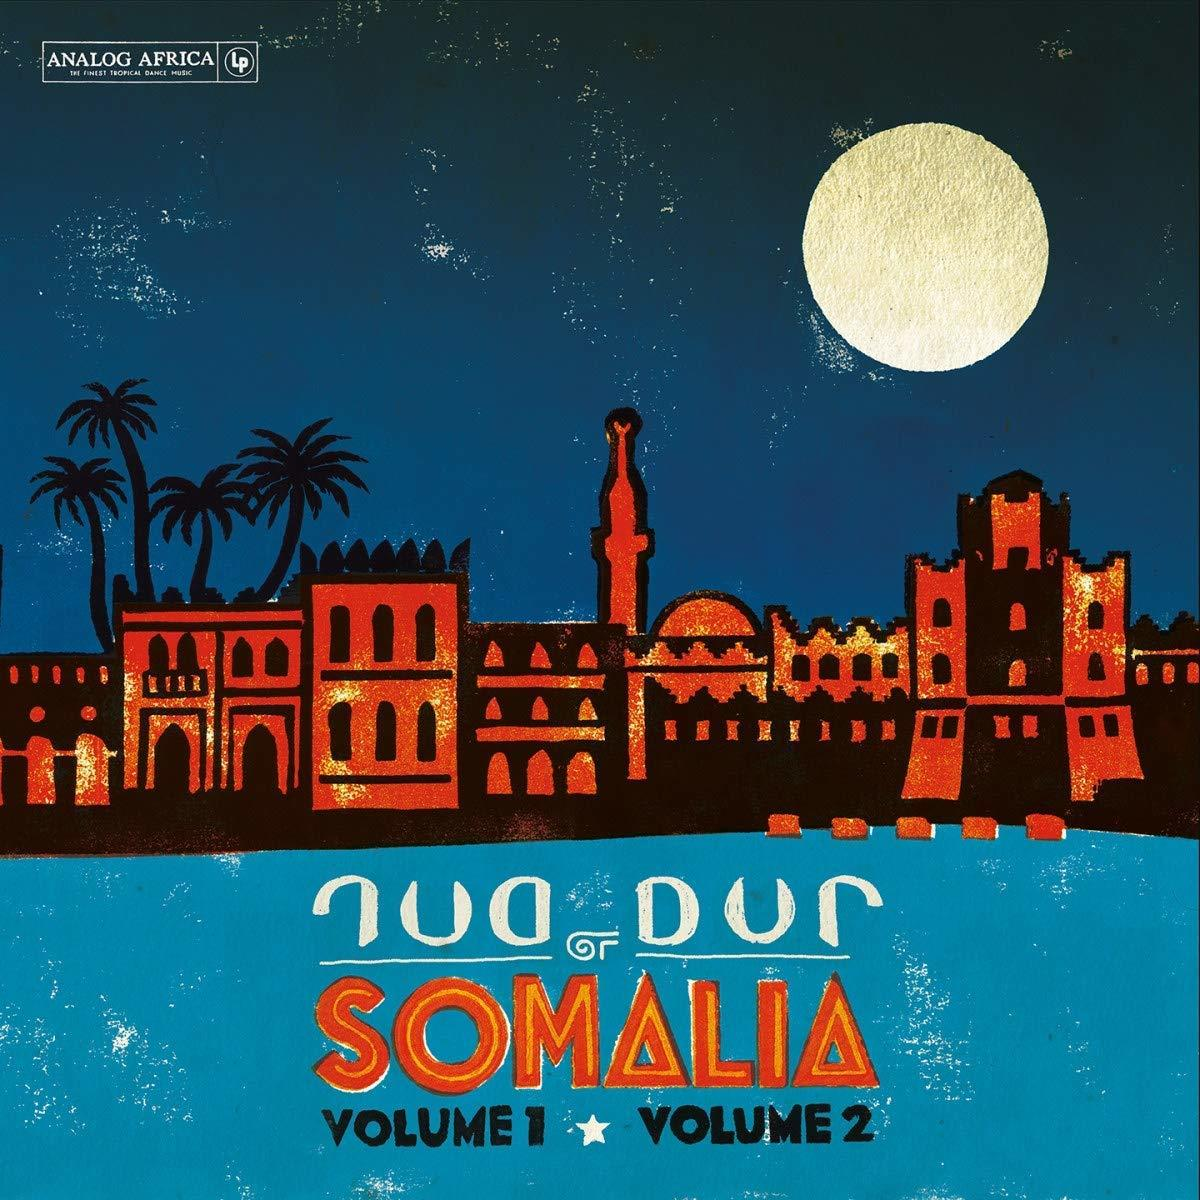 - Band (3LP) Dur Somalia - Dur (Vinyl) Of Dur Dur